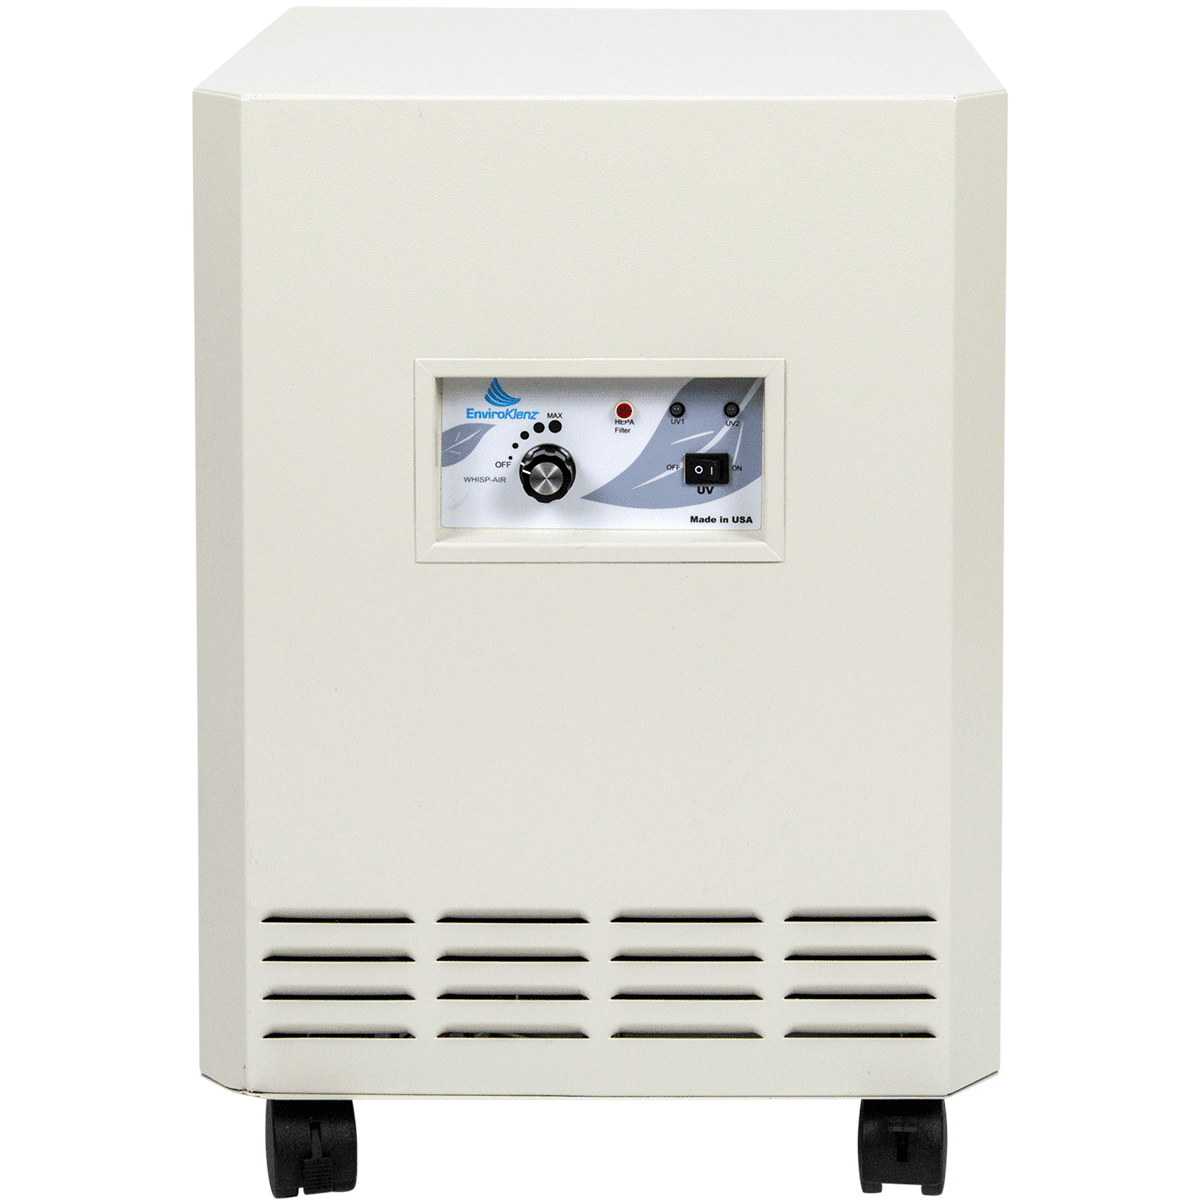 Enviroklenz UV-C Air Purifier - White